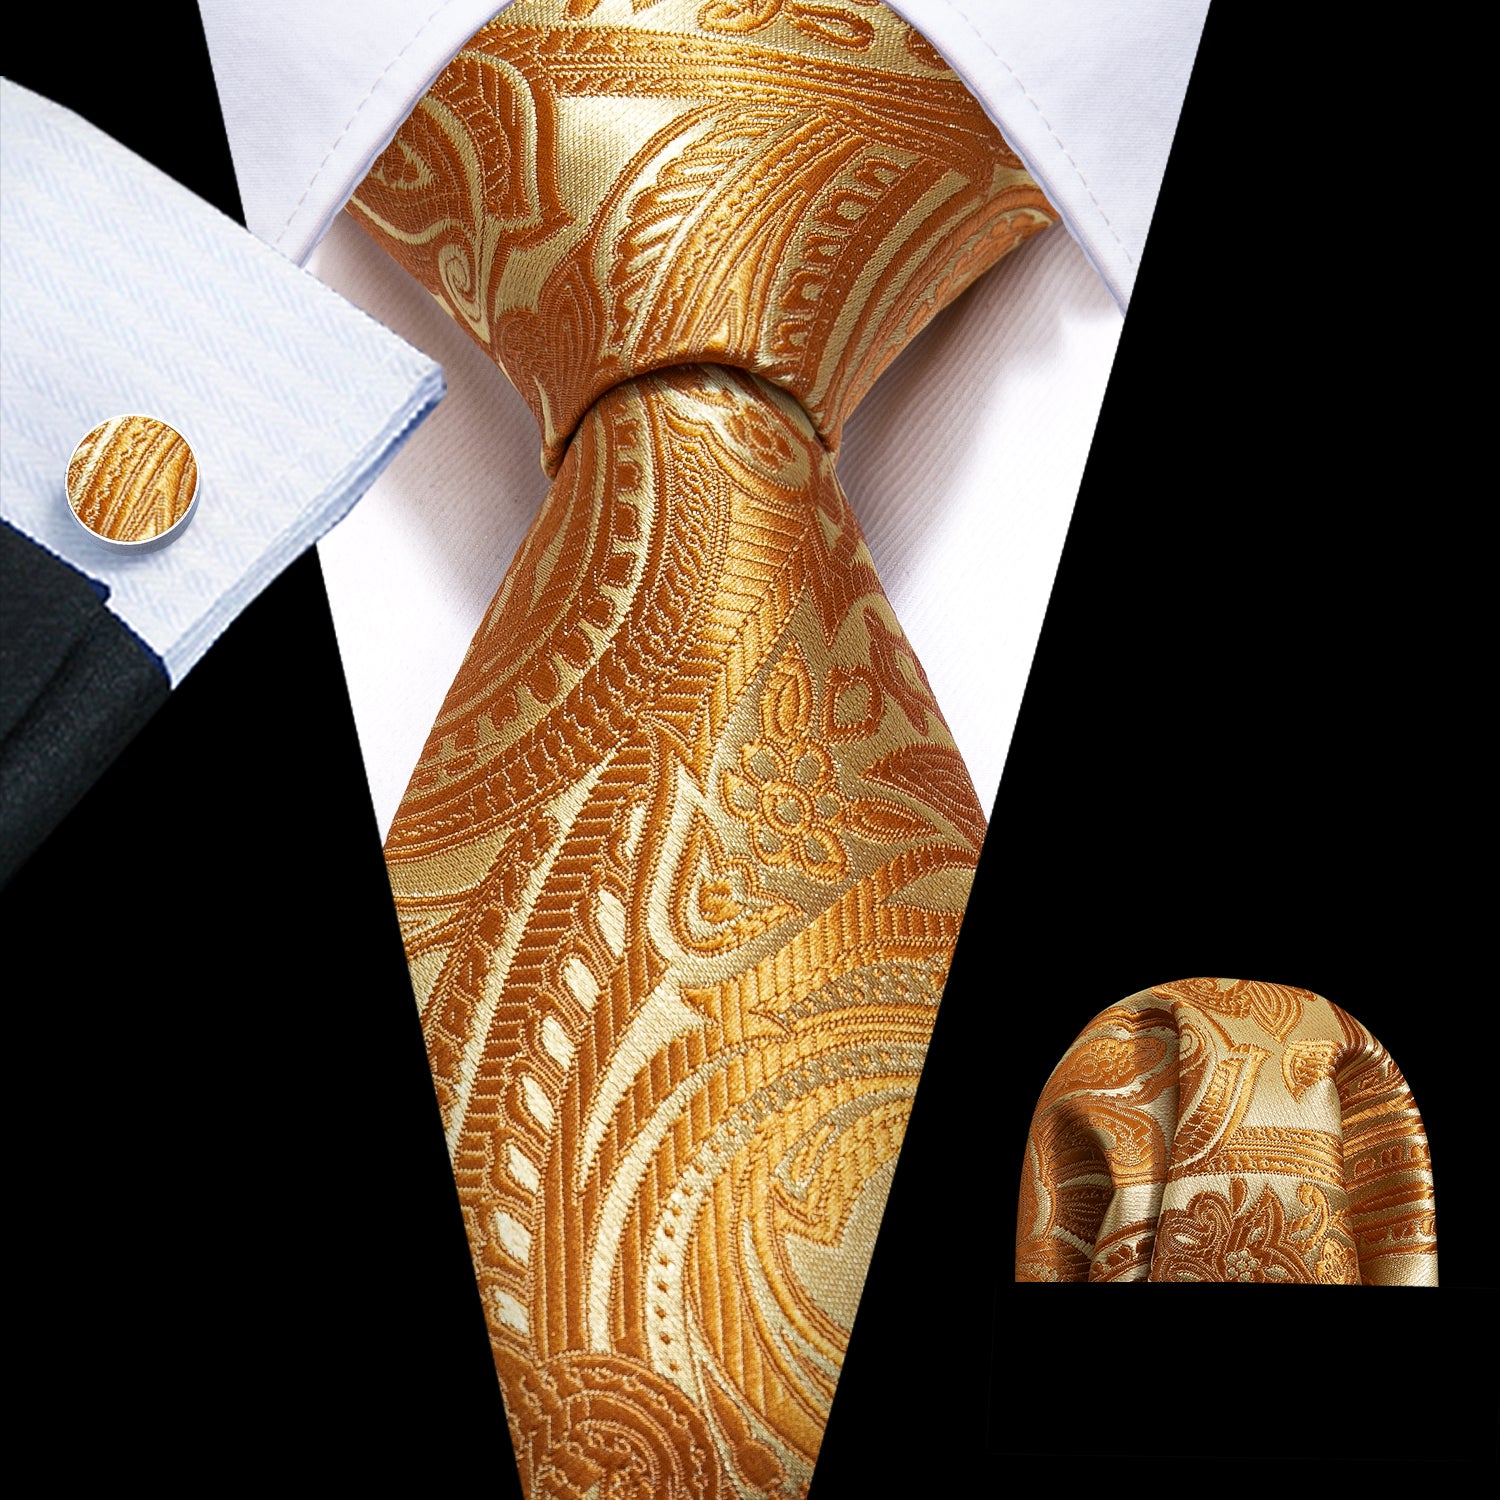 New Yellow Paisley Silk Tie Hanky Cufflinks Set